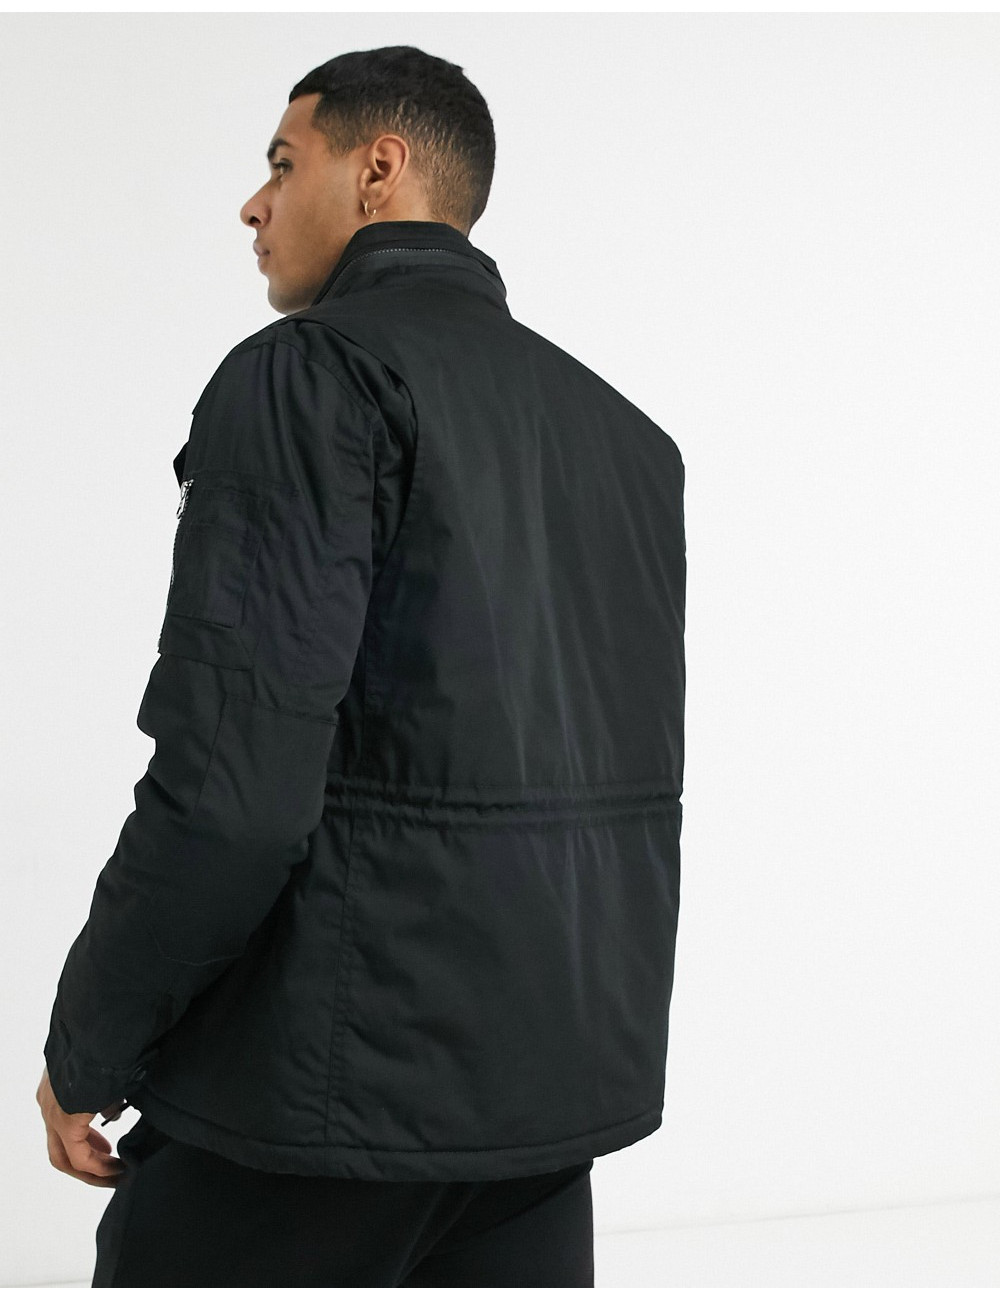 Schott parka jacket in black